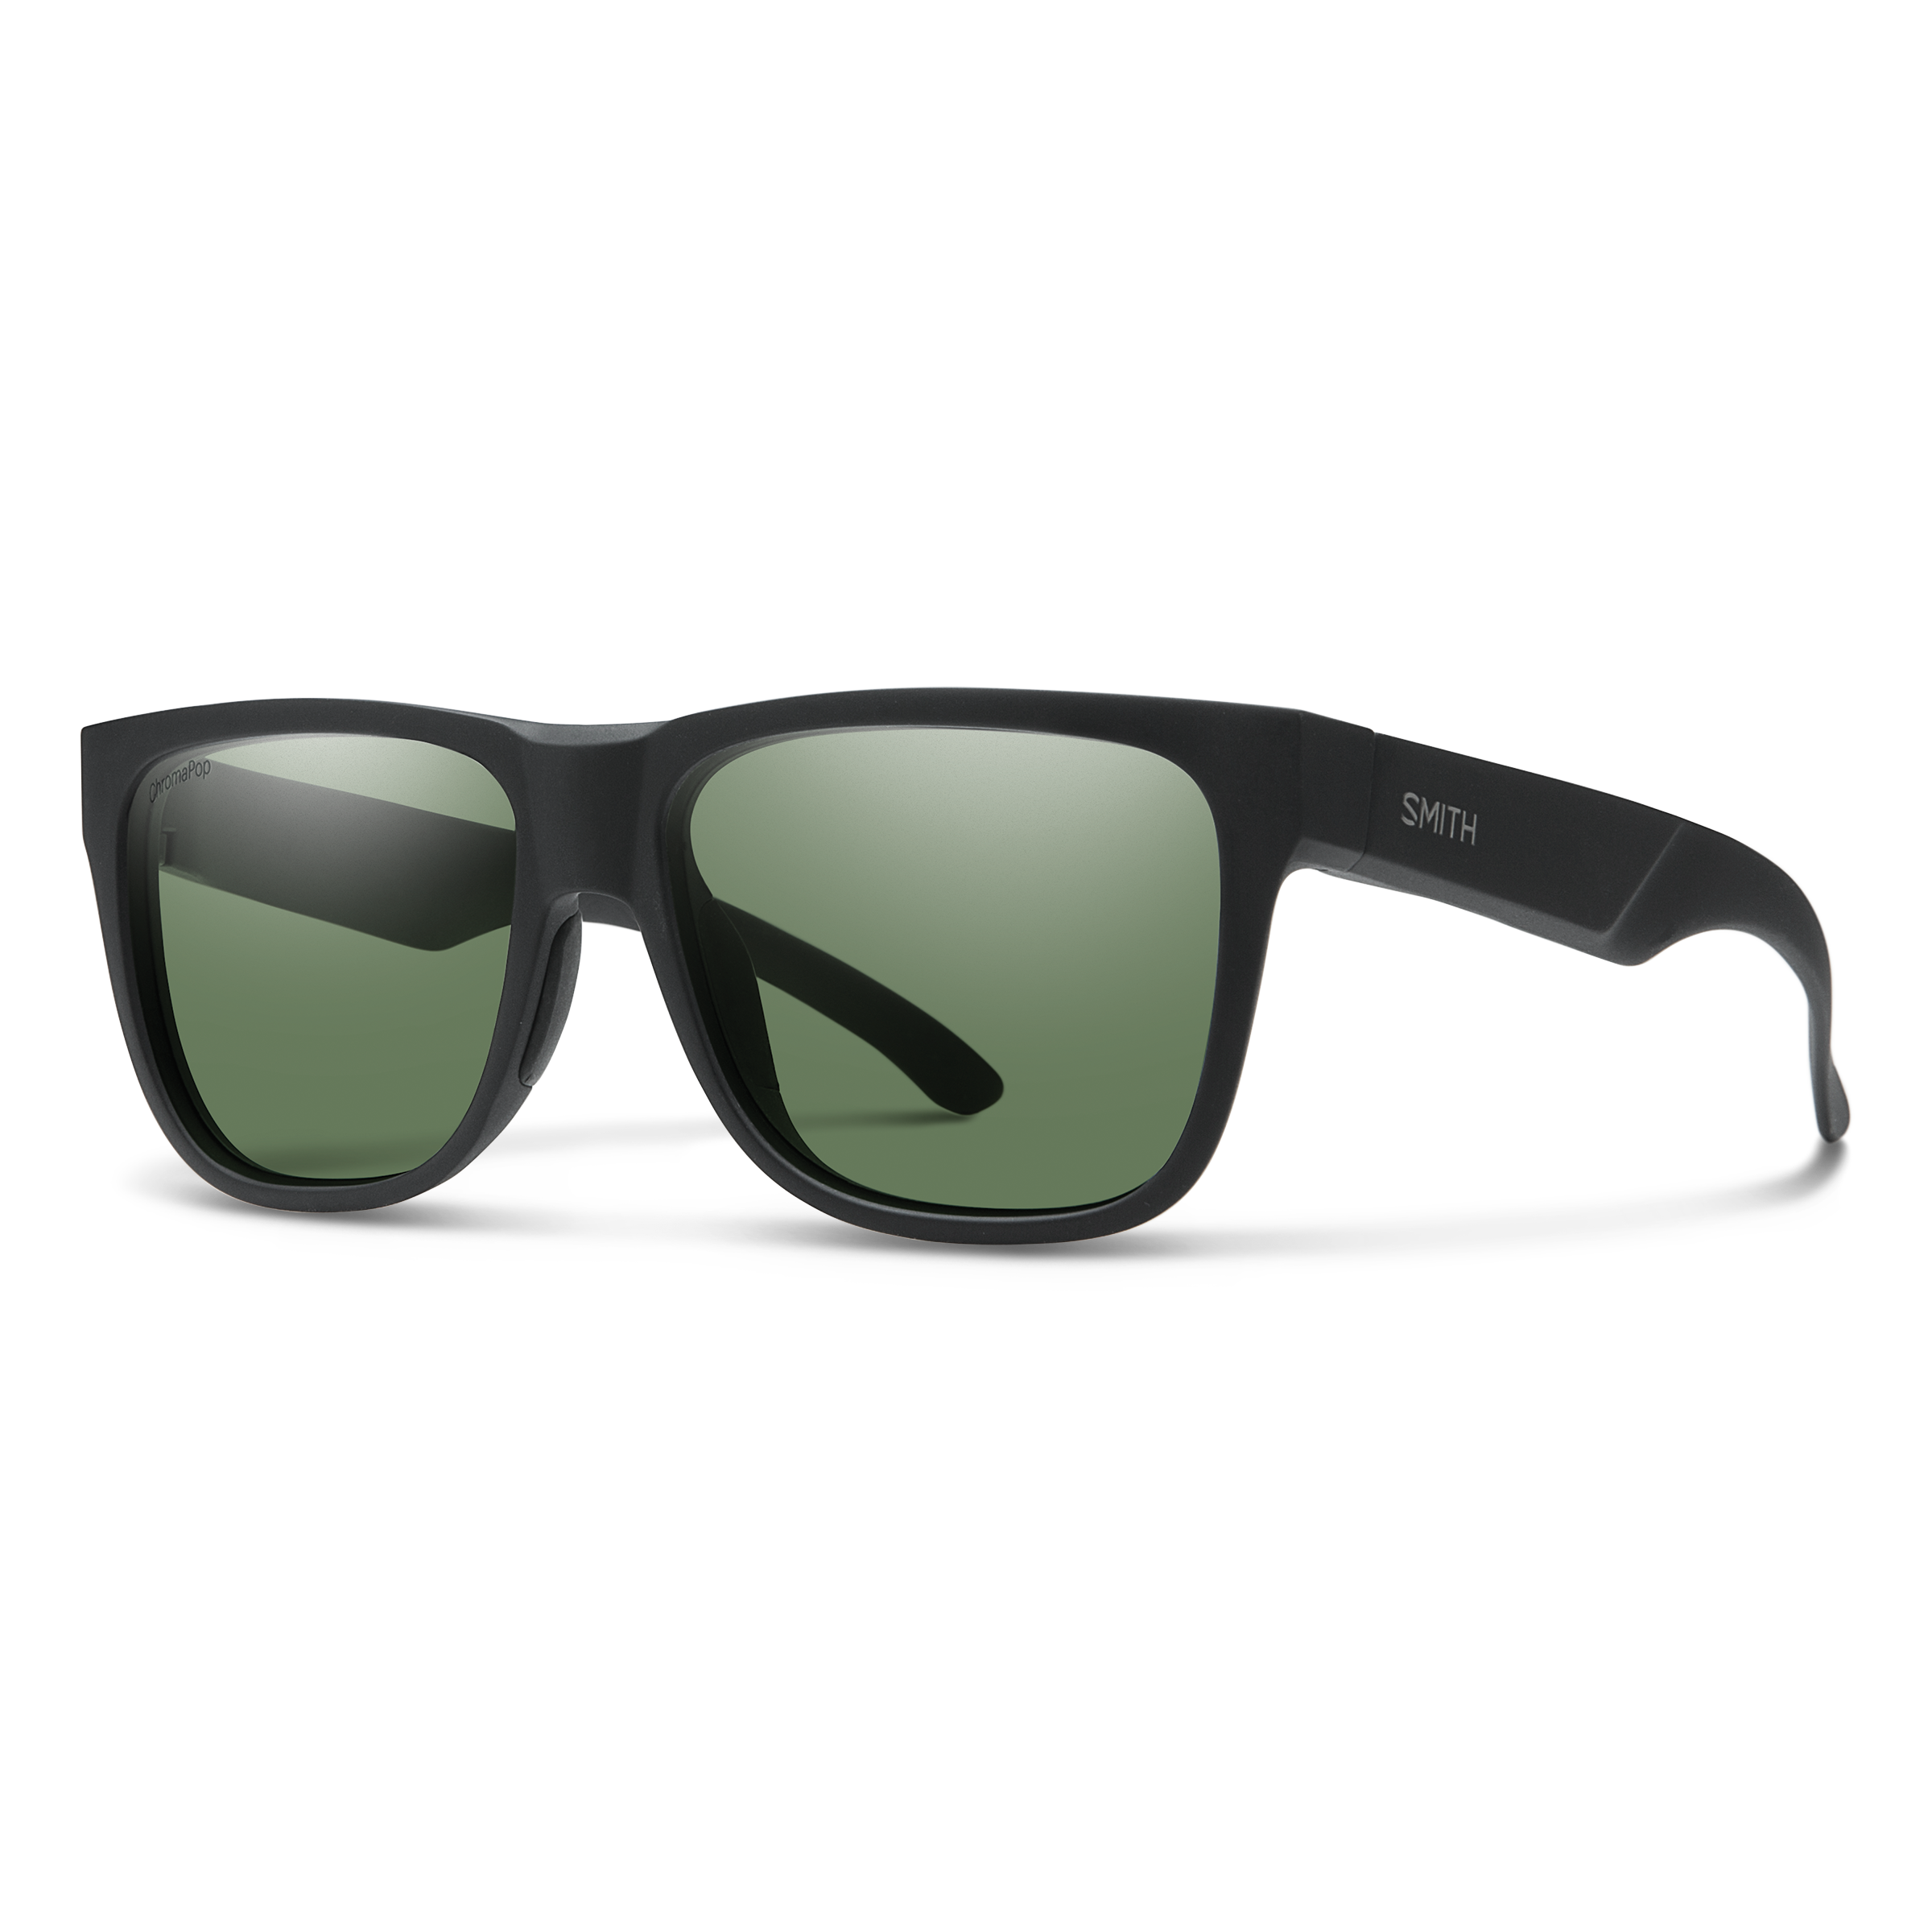 Smith Optics Sunglasses Adult Lowdown 2 Ridge Contemporary Ld2c Matte Black Gray Green for sale online 